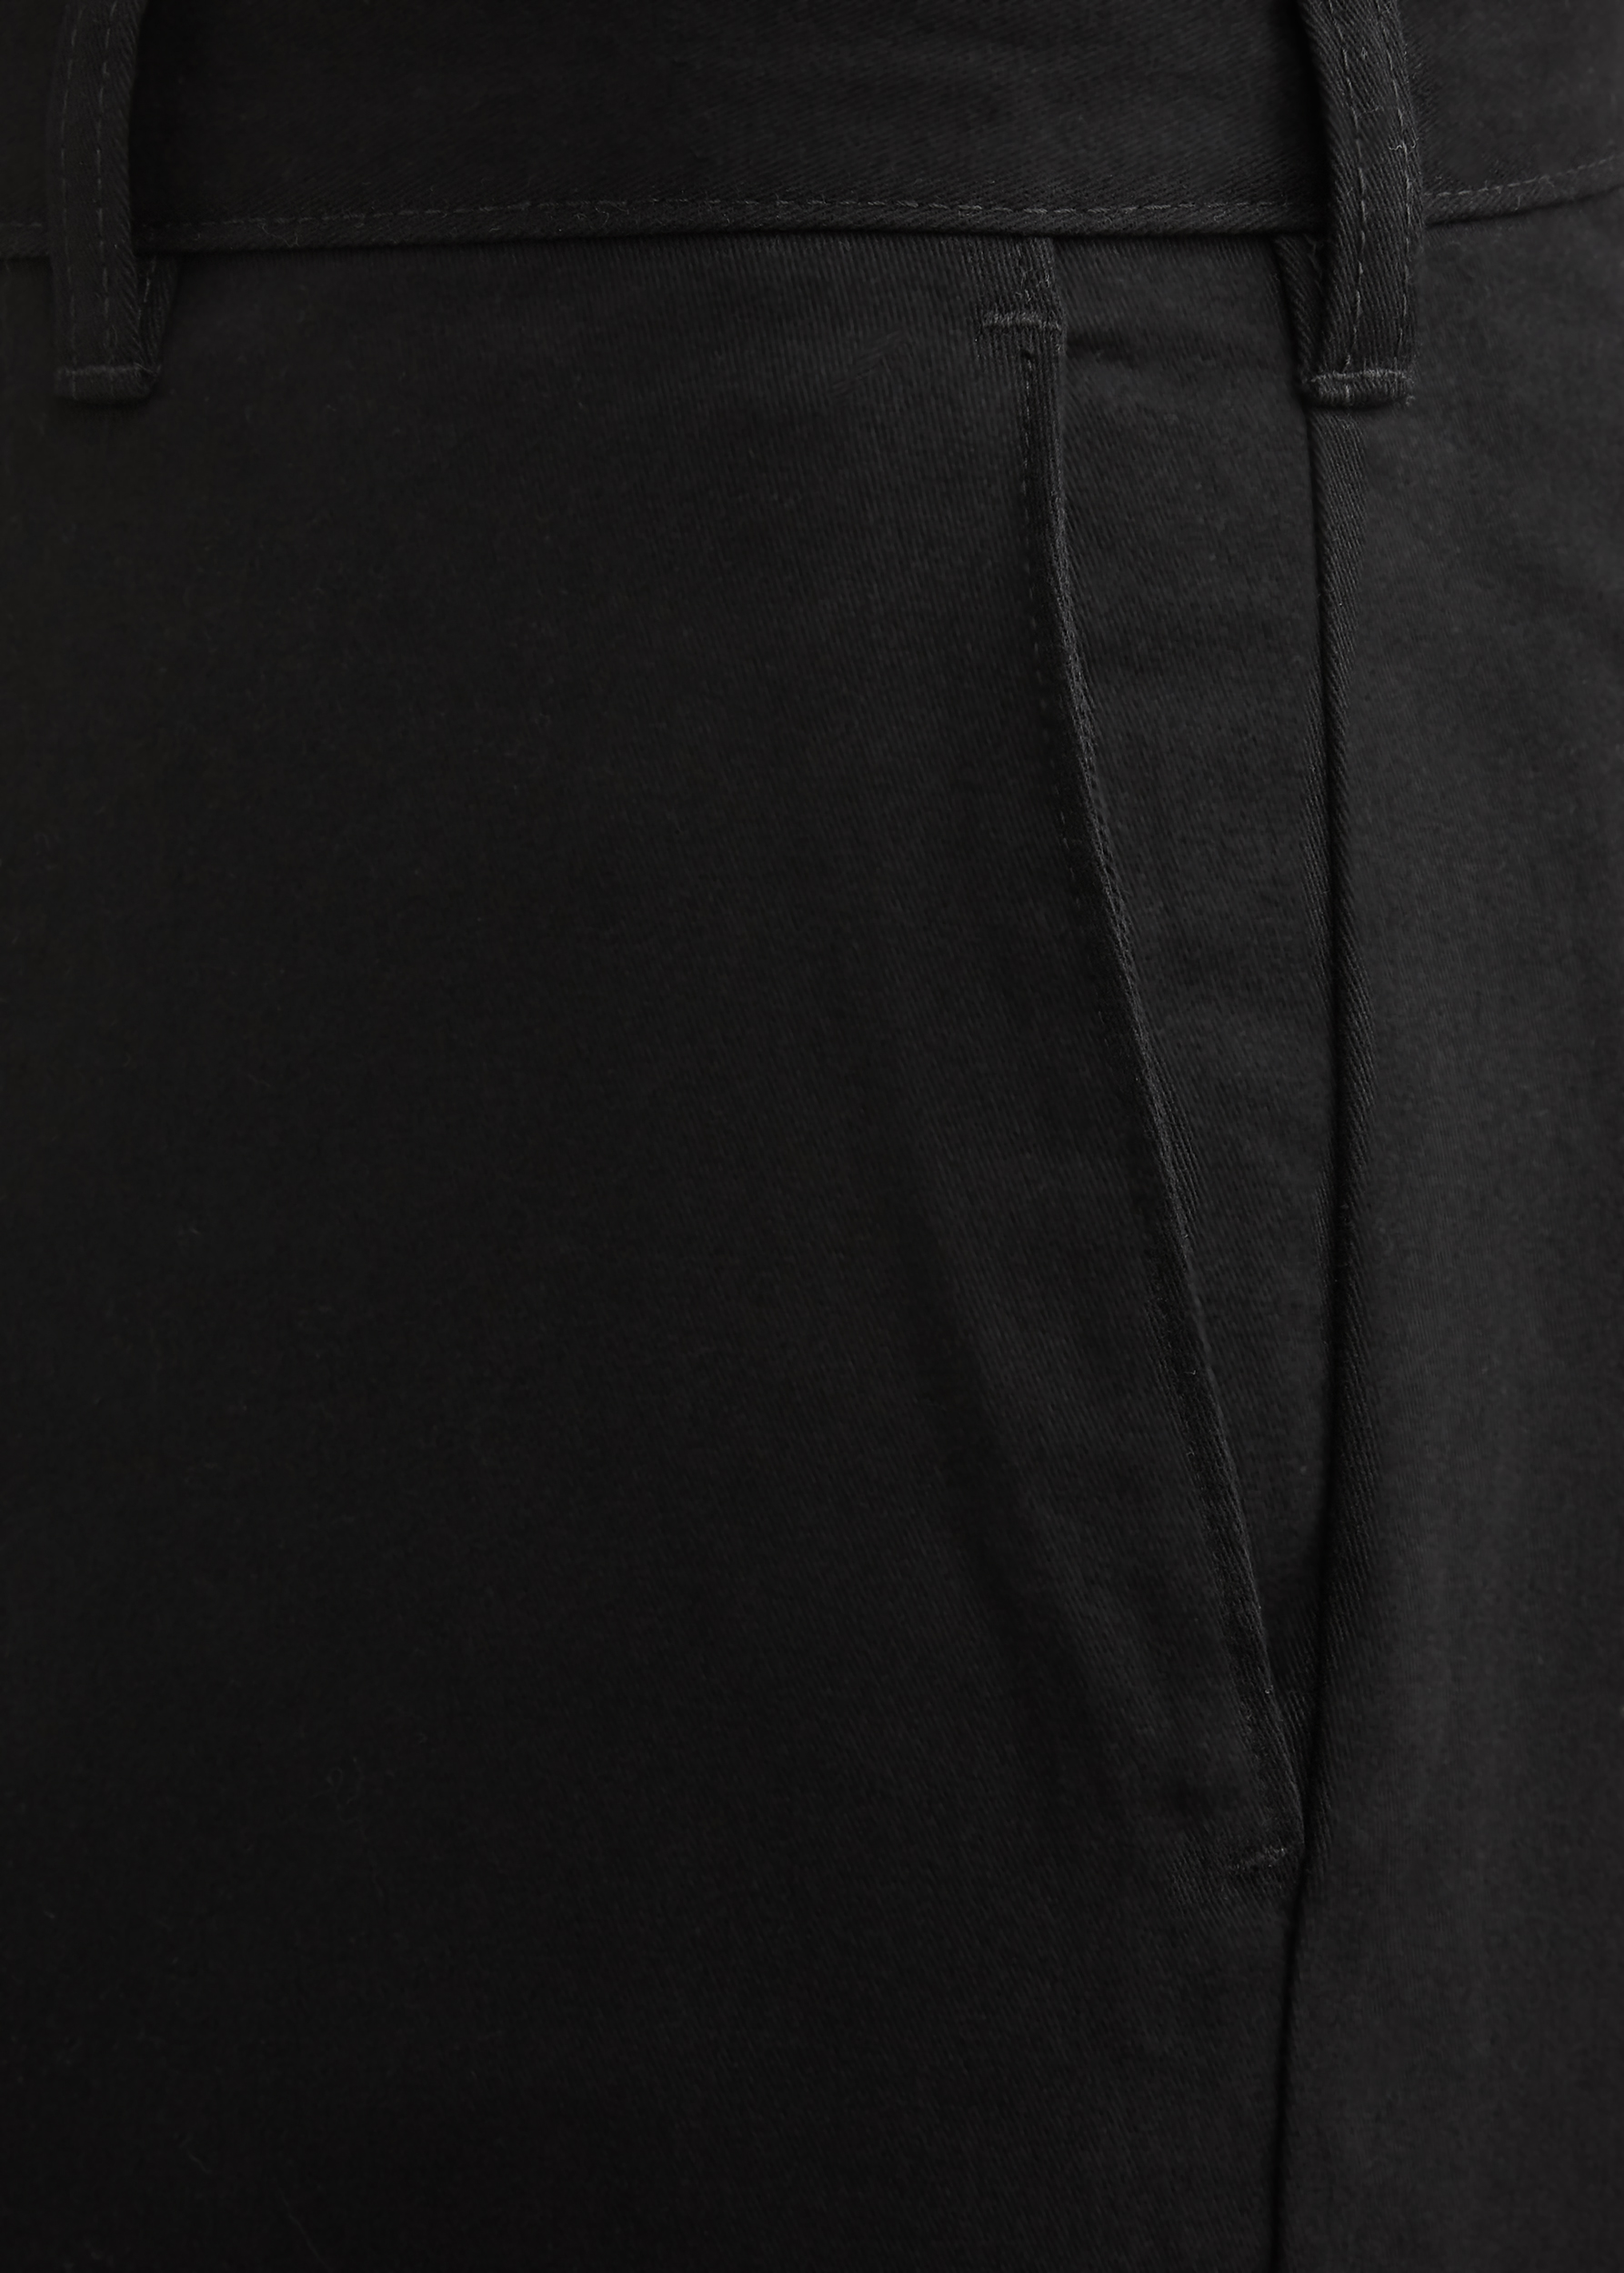 George Men's Flat Front Wrinkle Resistant Pants - image 2 of 4